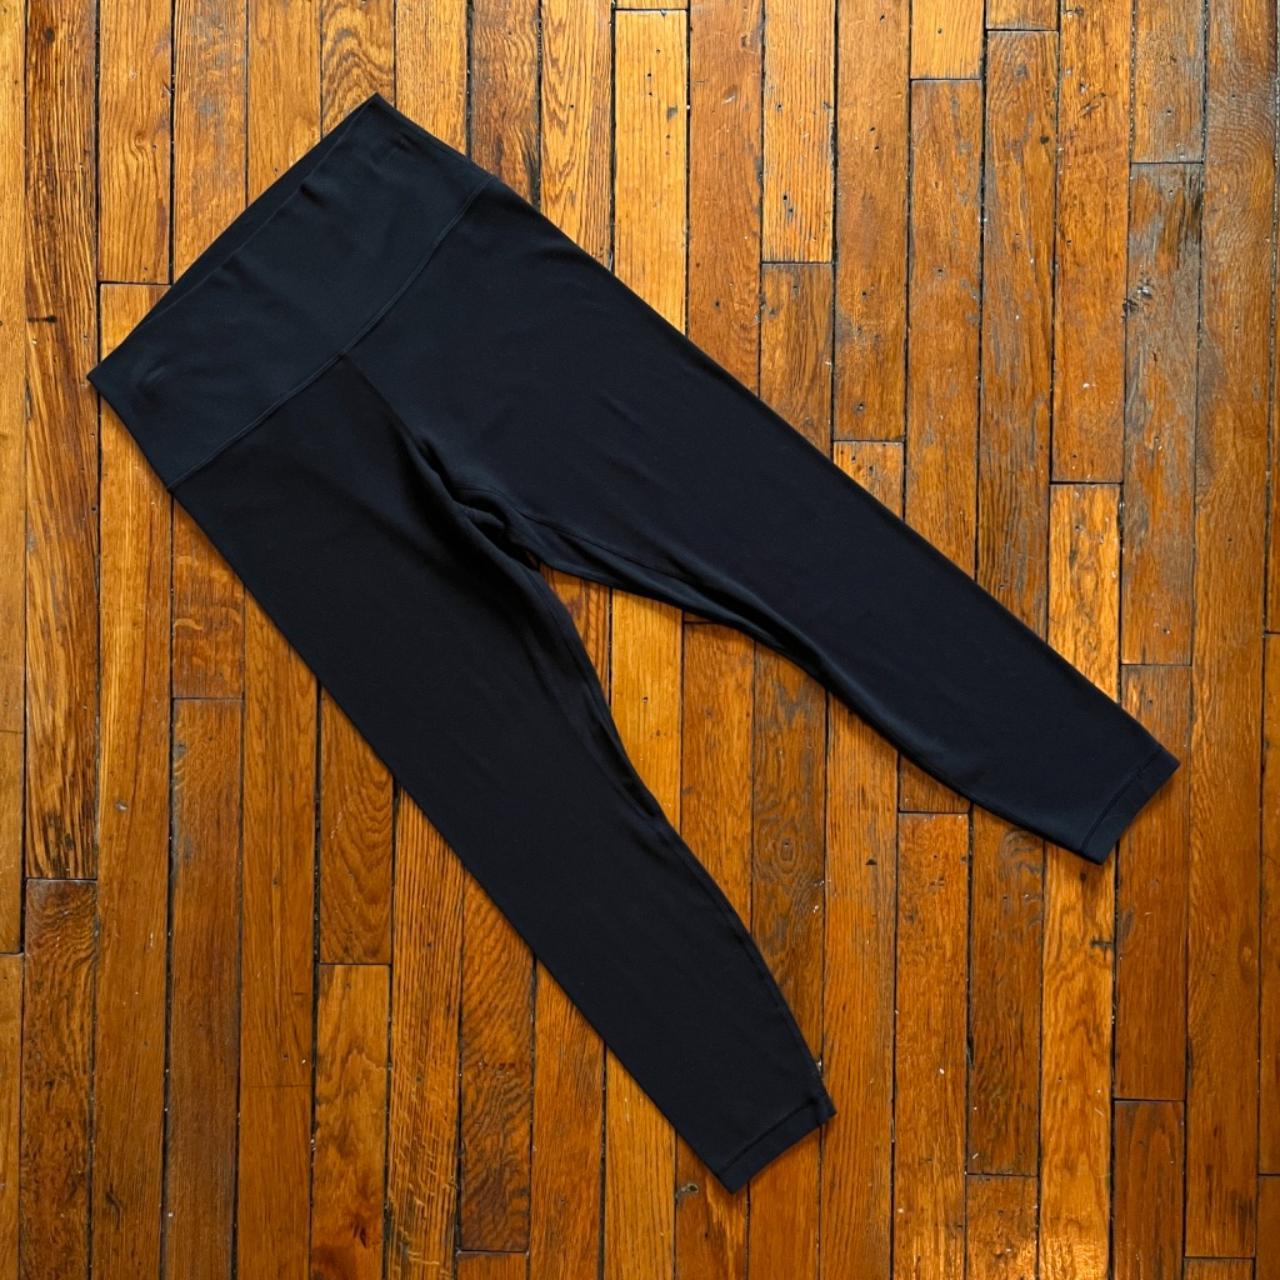 Lululemon Women's Black Capri Ankle Yoga Pants - Depop